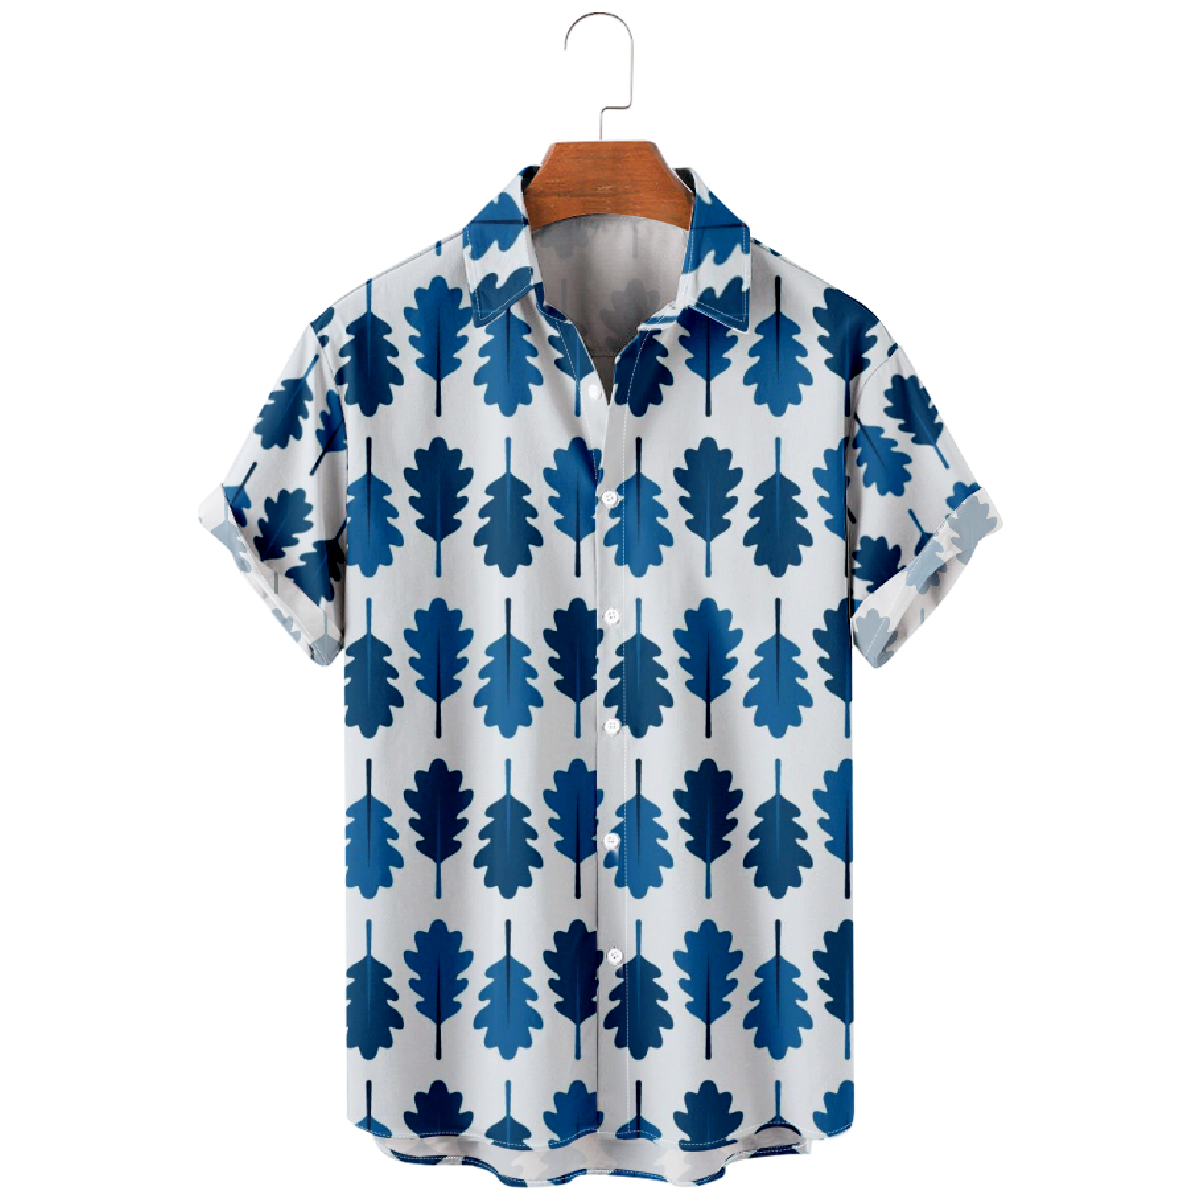 Oak Tree Leaves Print Button Up Shirt Men's Leaves Print Short Sleeve Shirt Casual Shirt